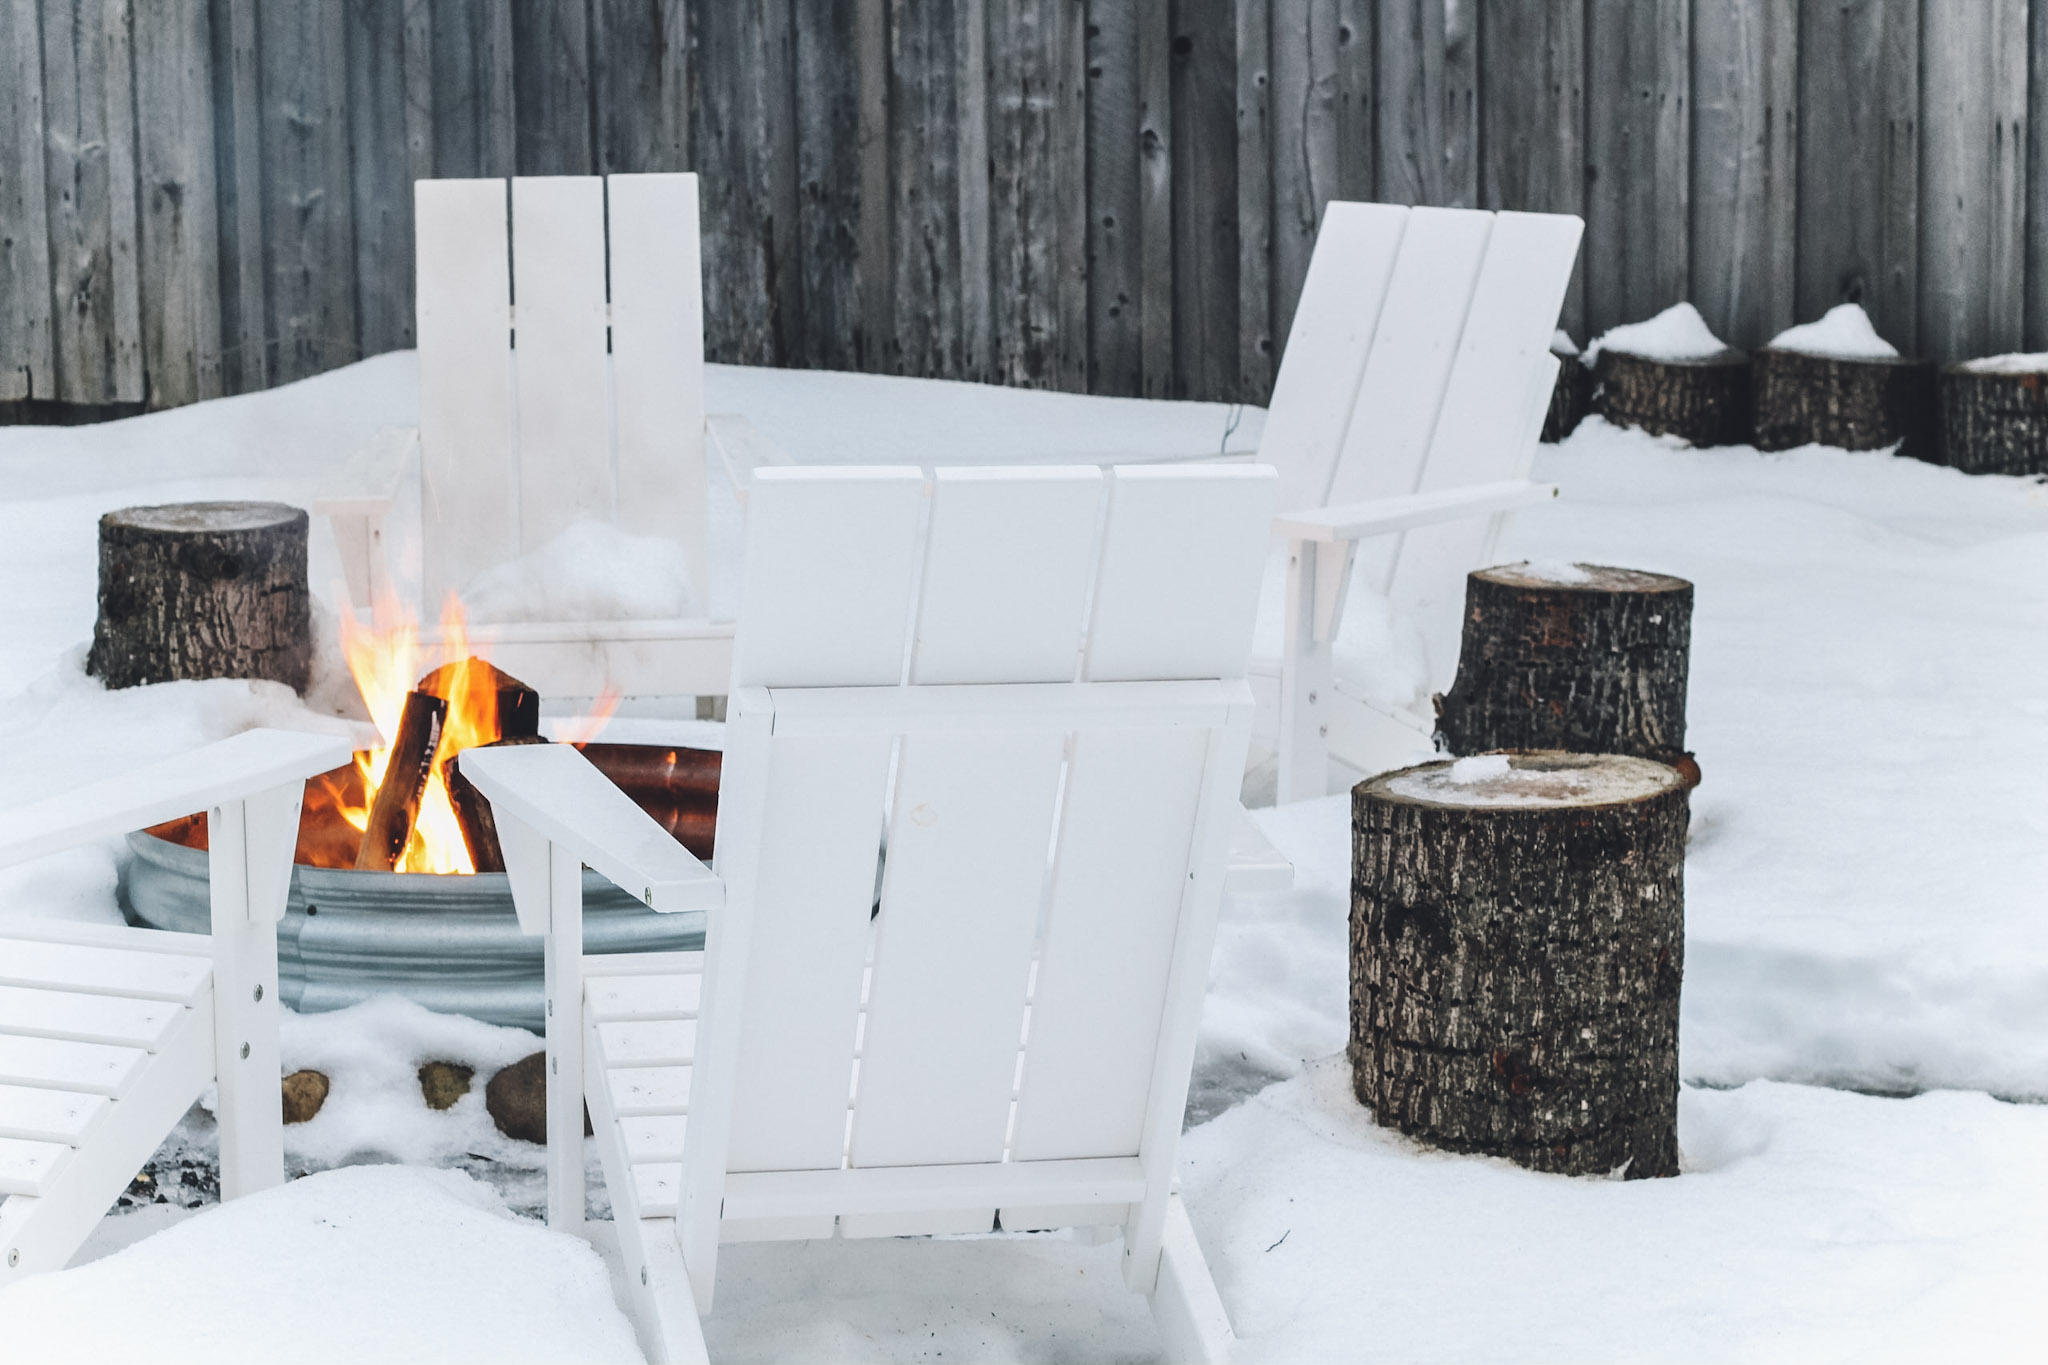 warners camp fire pit cabin weekend getaway lake placid Adirondack chairs